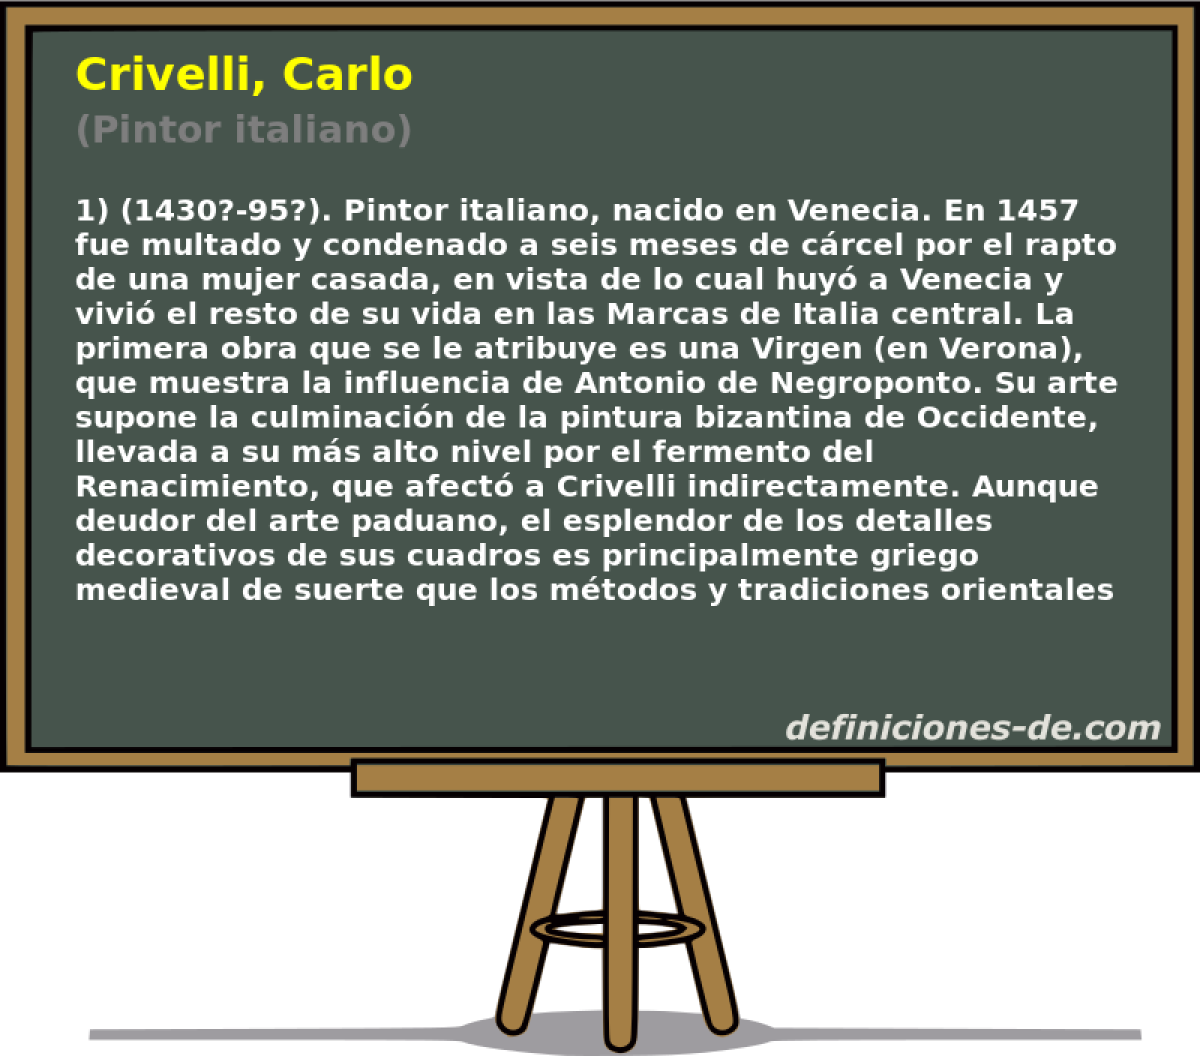 Crivelli, Carlo (Pintor italiano)